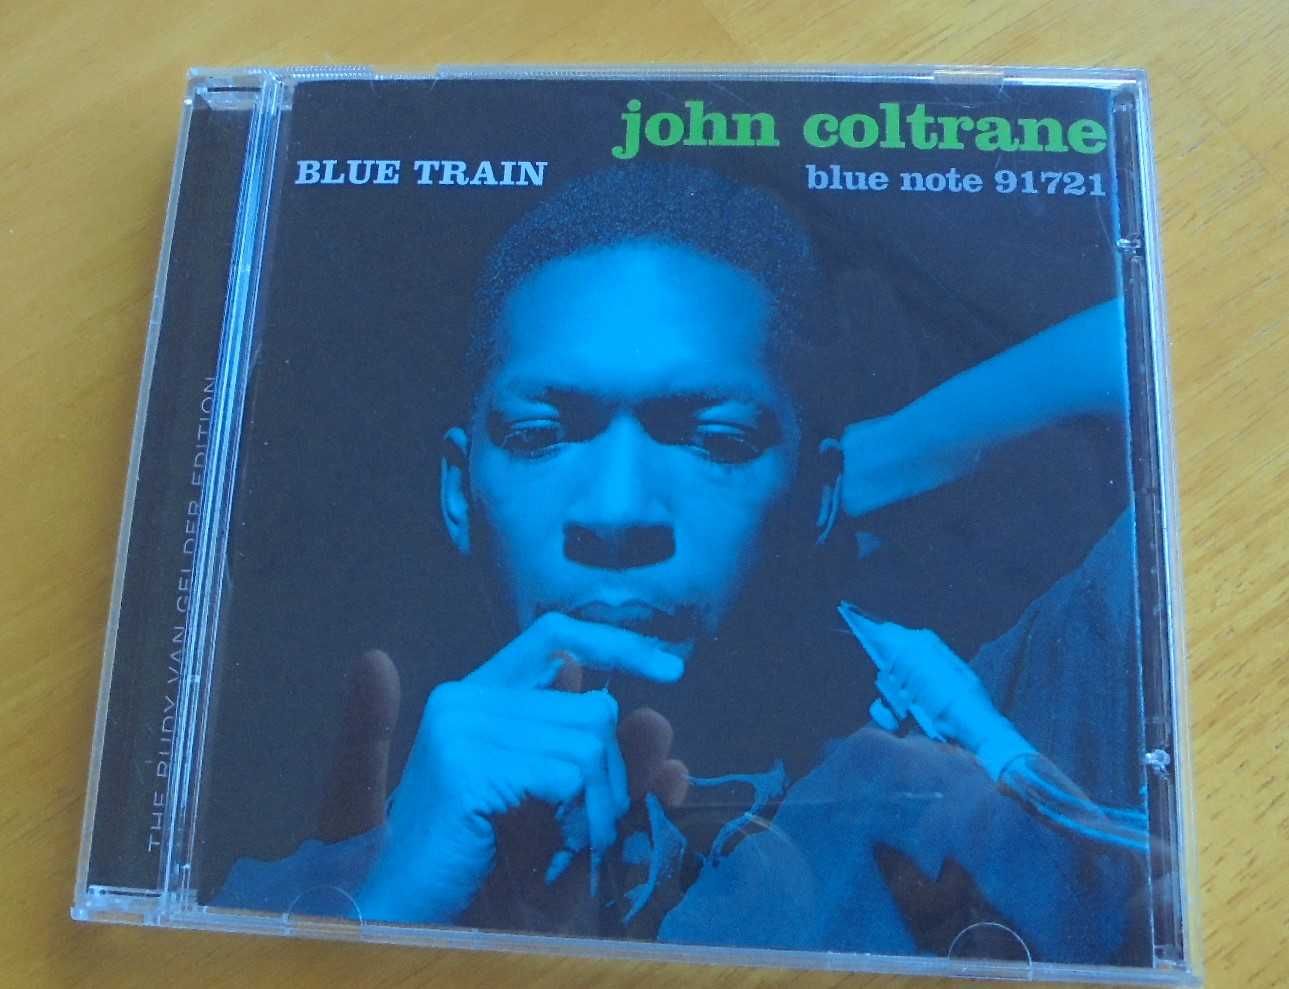 Plyta CD John Coltrane Blue train